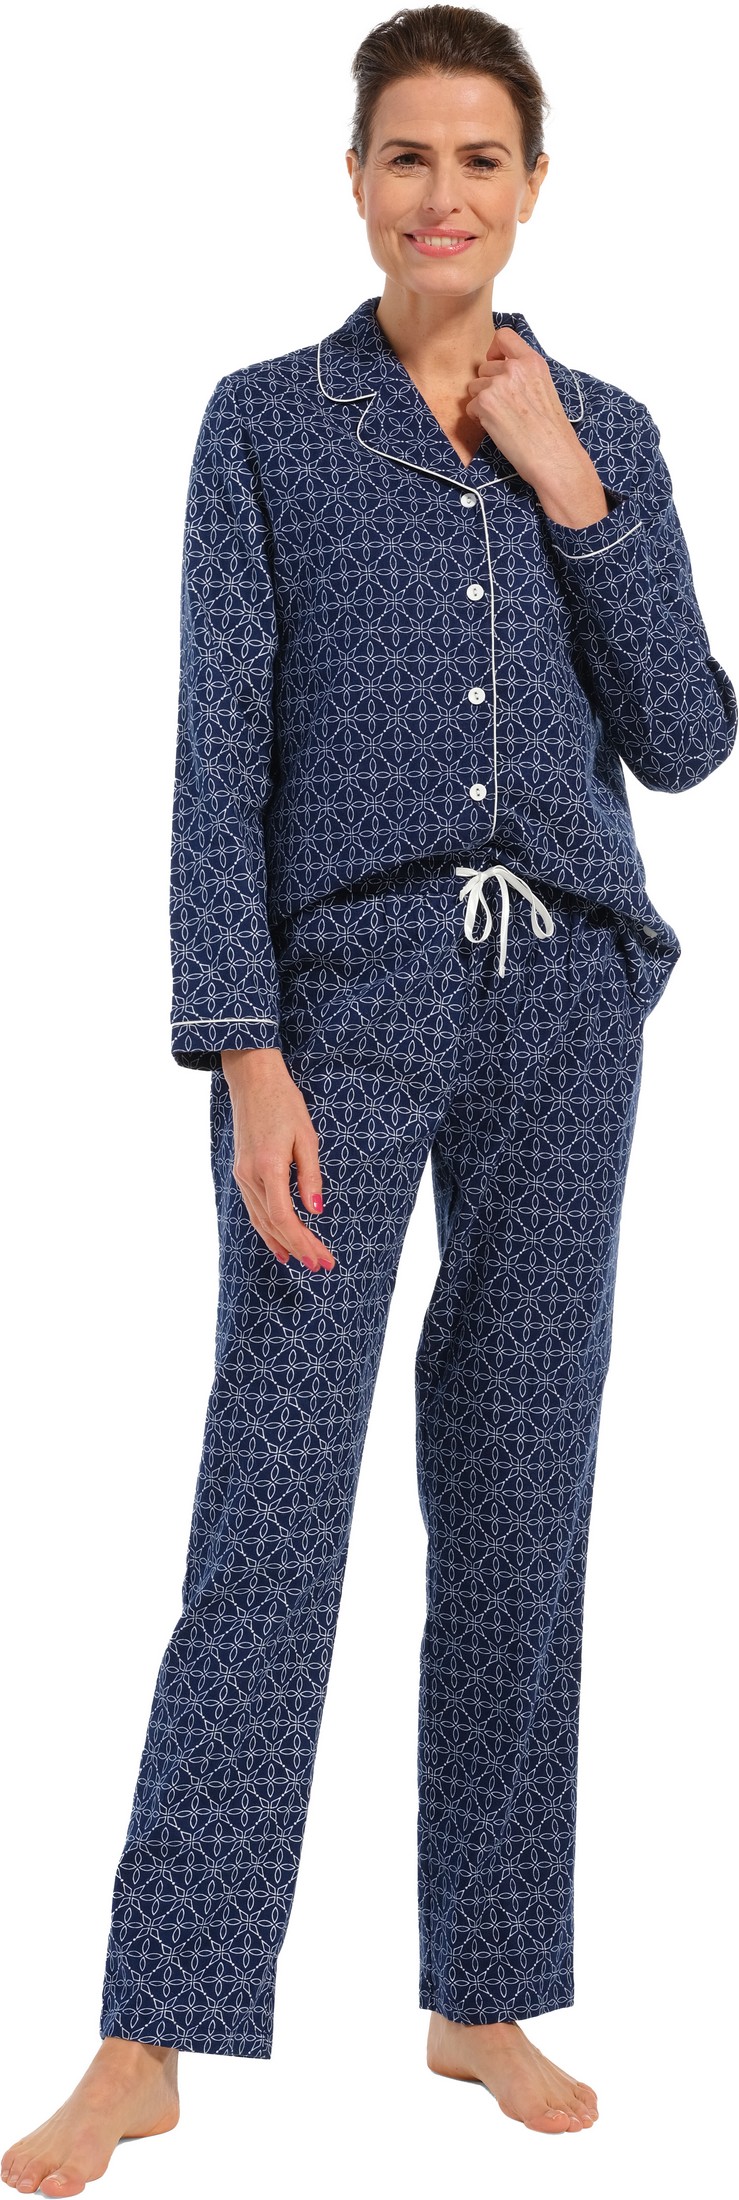 Pastunette dames pyjama flanel 20232-120-6 - Blauw - 40